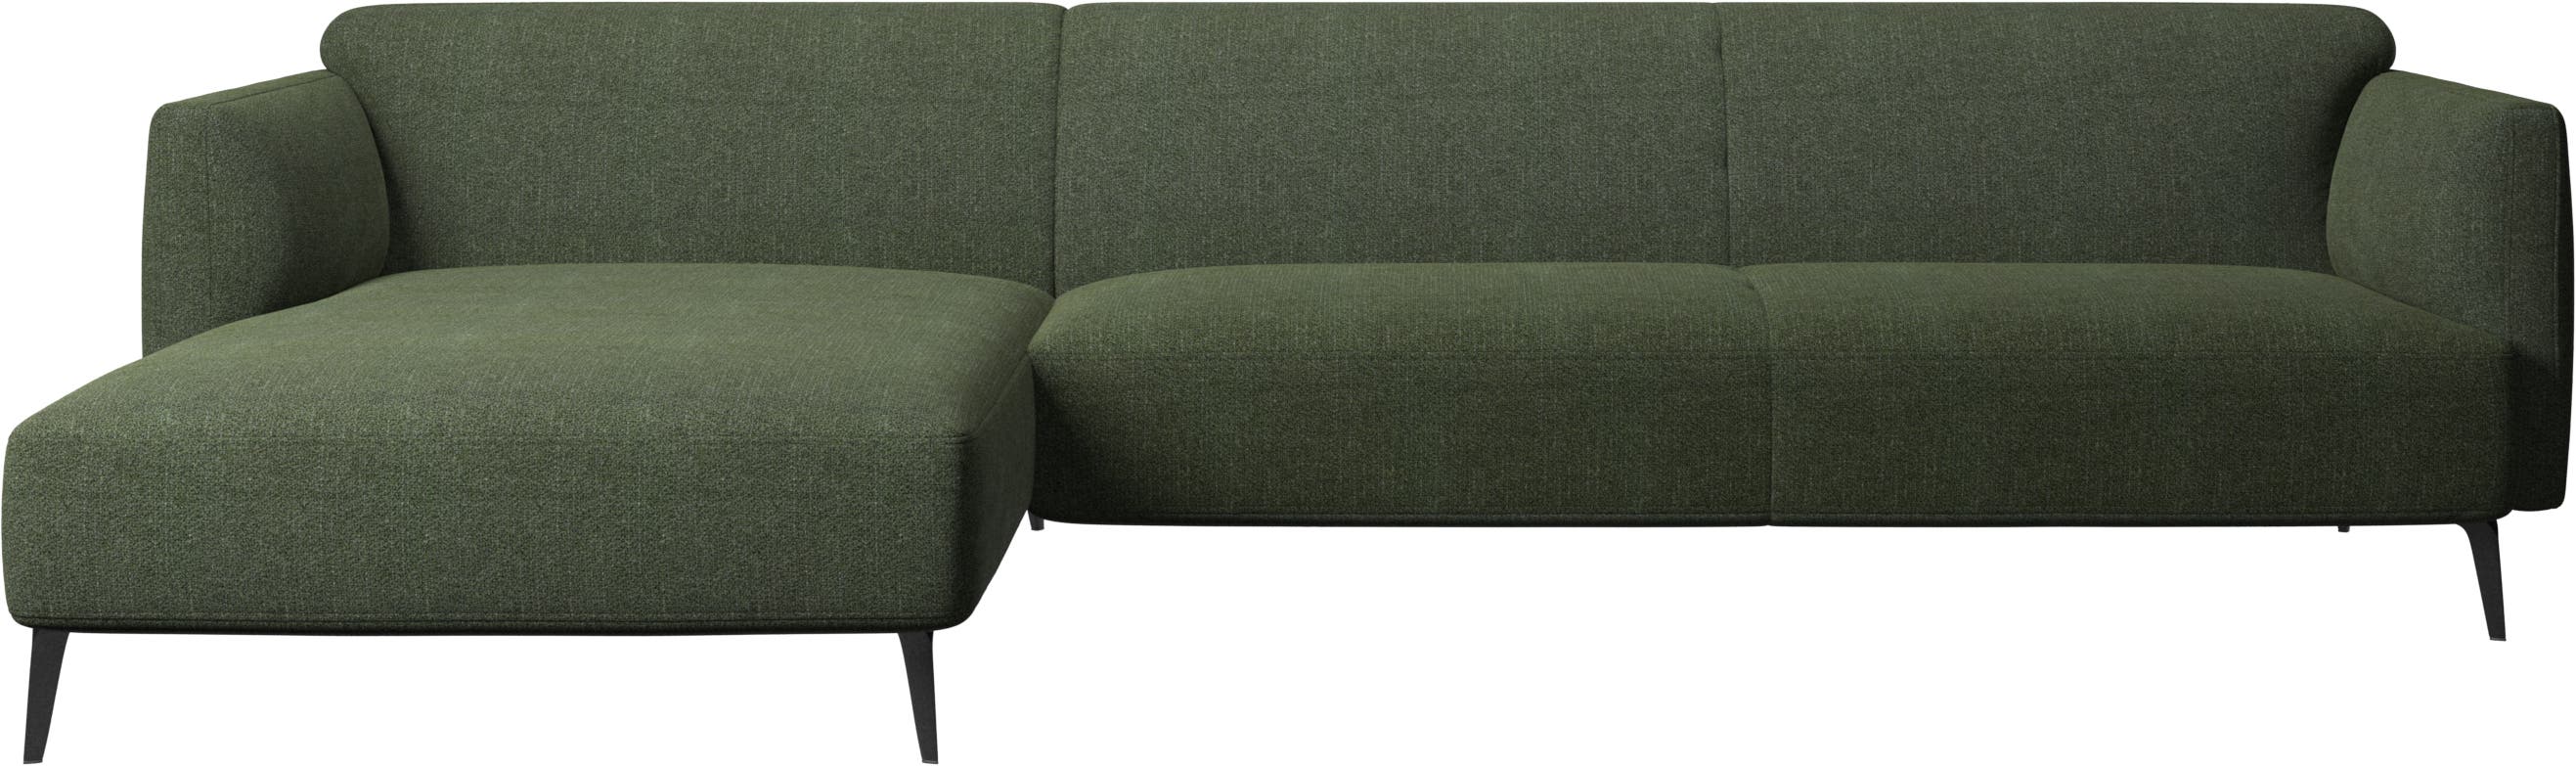 Modena sofá com módulo chaise-longue